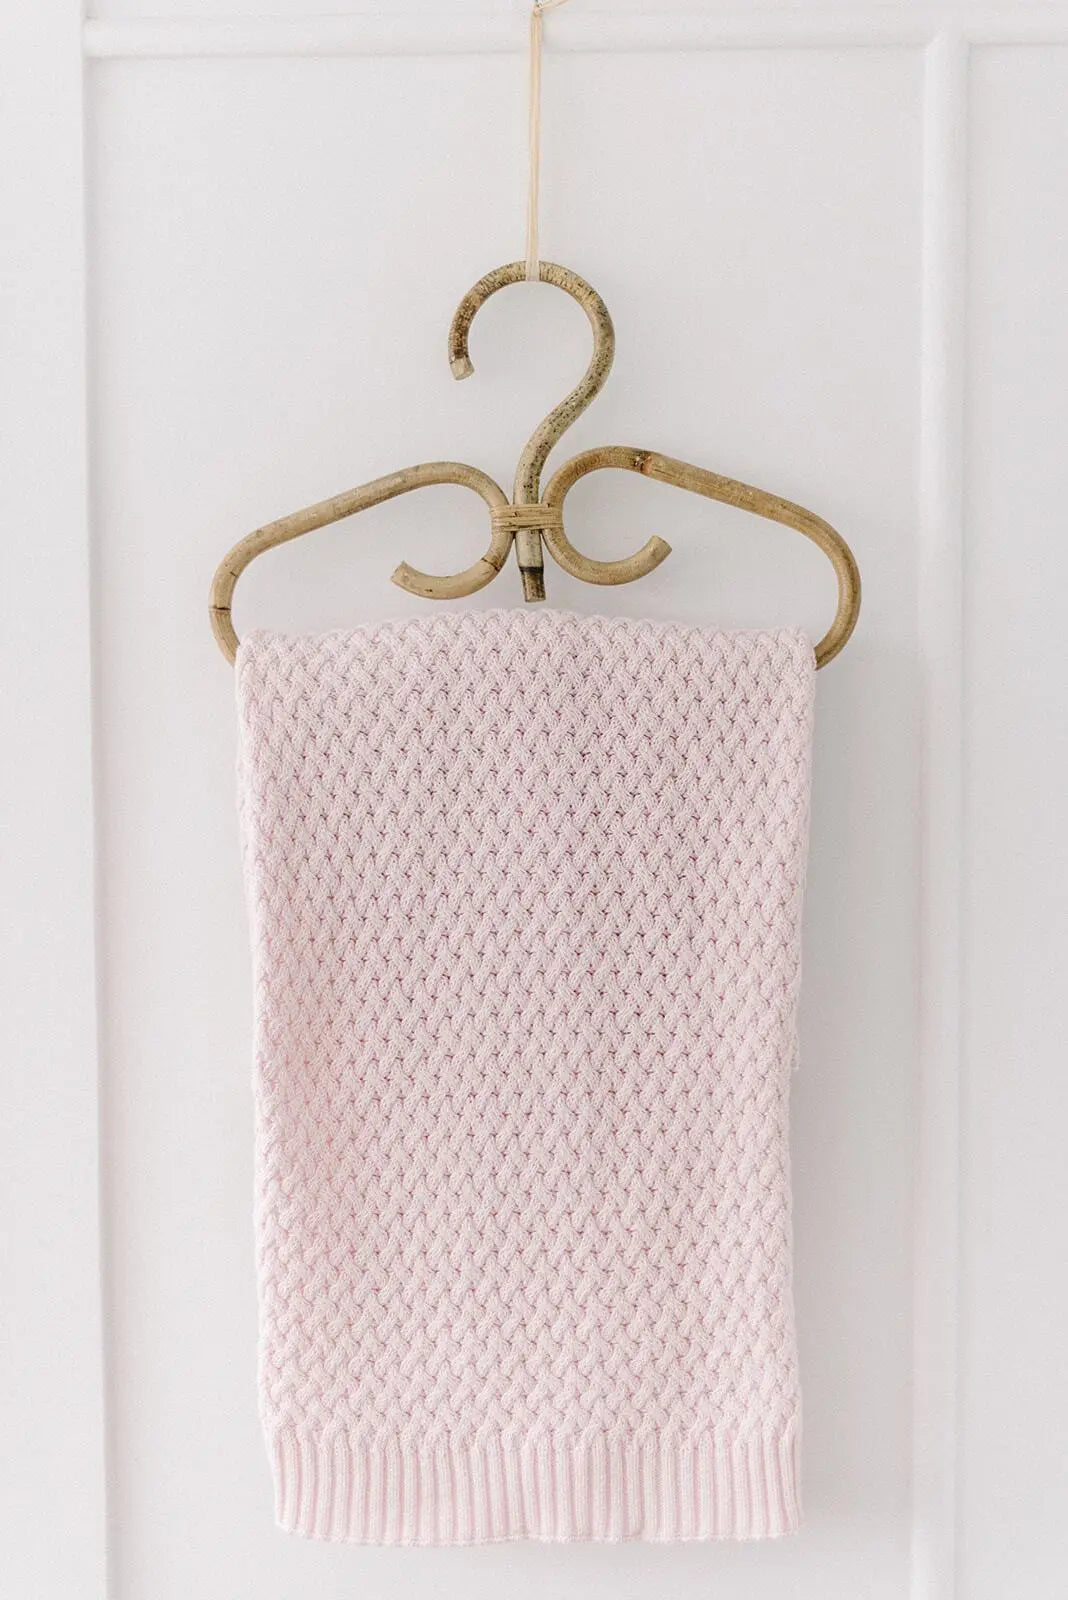 Blankets & Comforters Blush Pink Diamond Knit Baby Blanket Snuggle Hunny 79.95